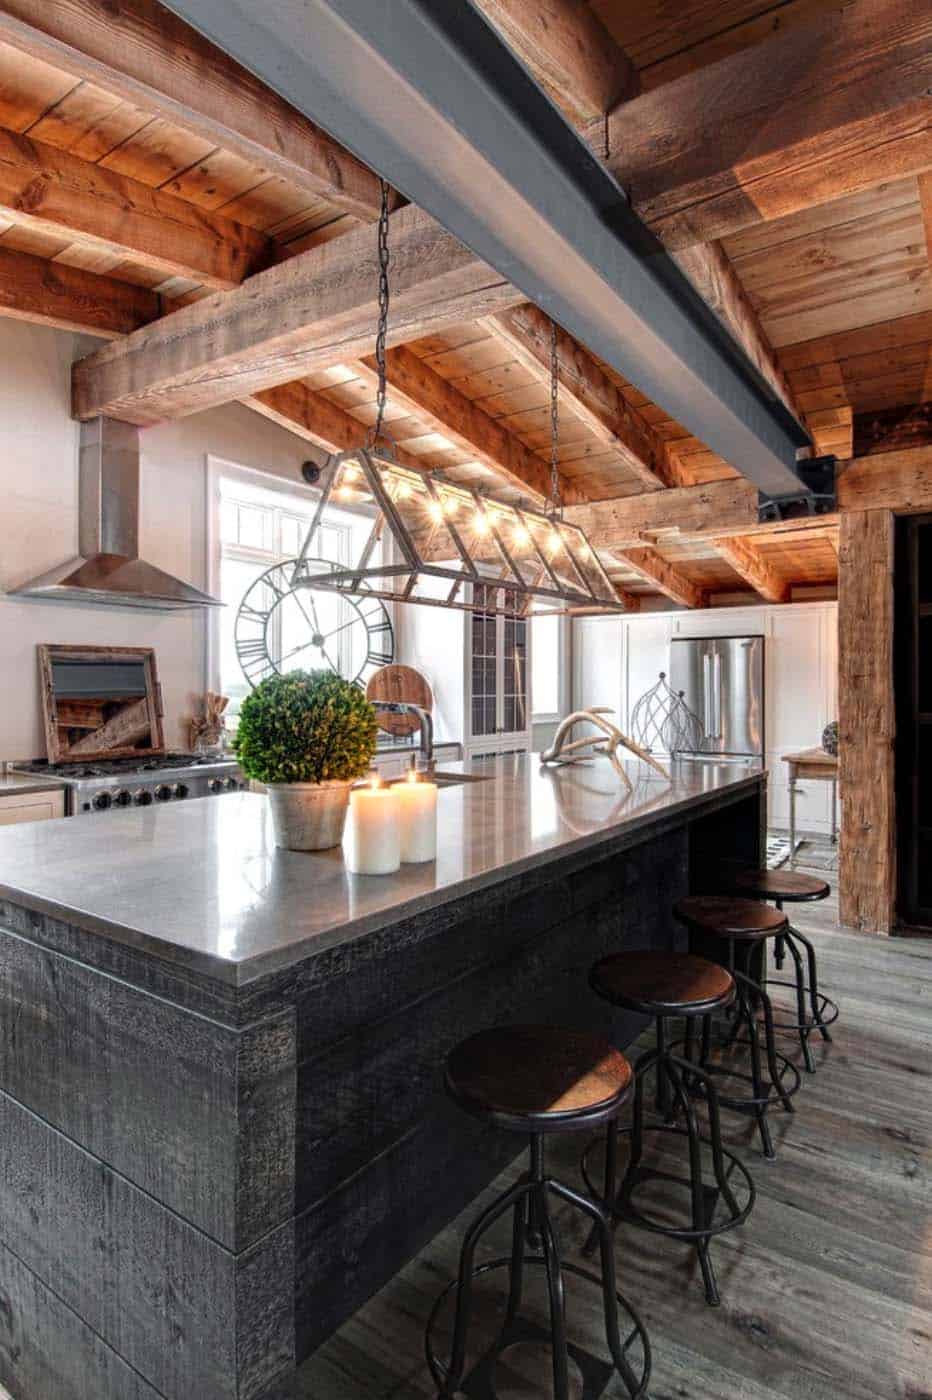 Luxury Canadian home reveals splendid rusticmodern aesthetic